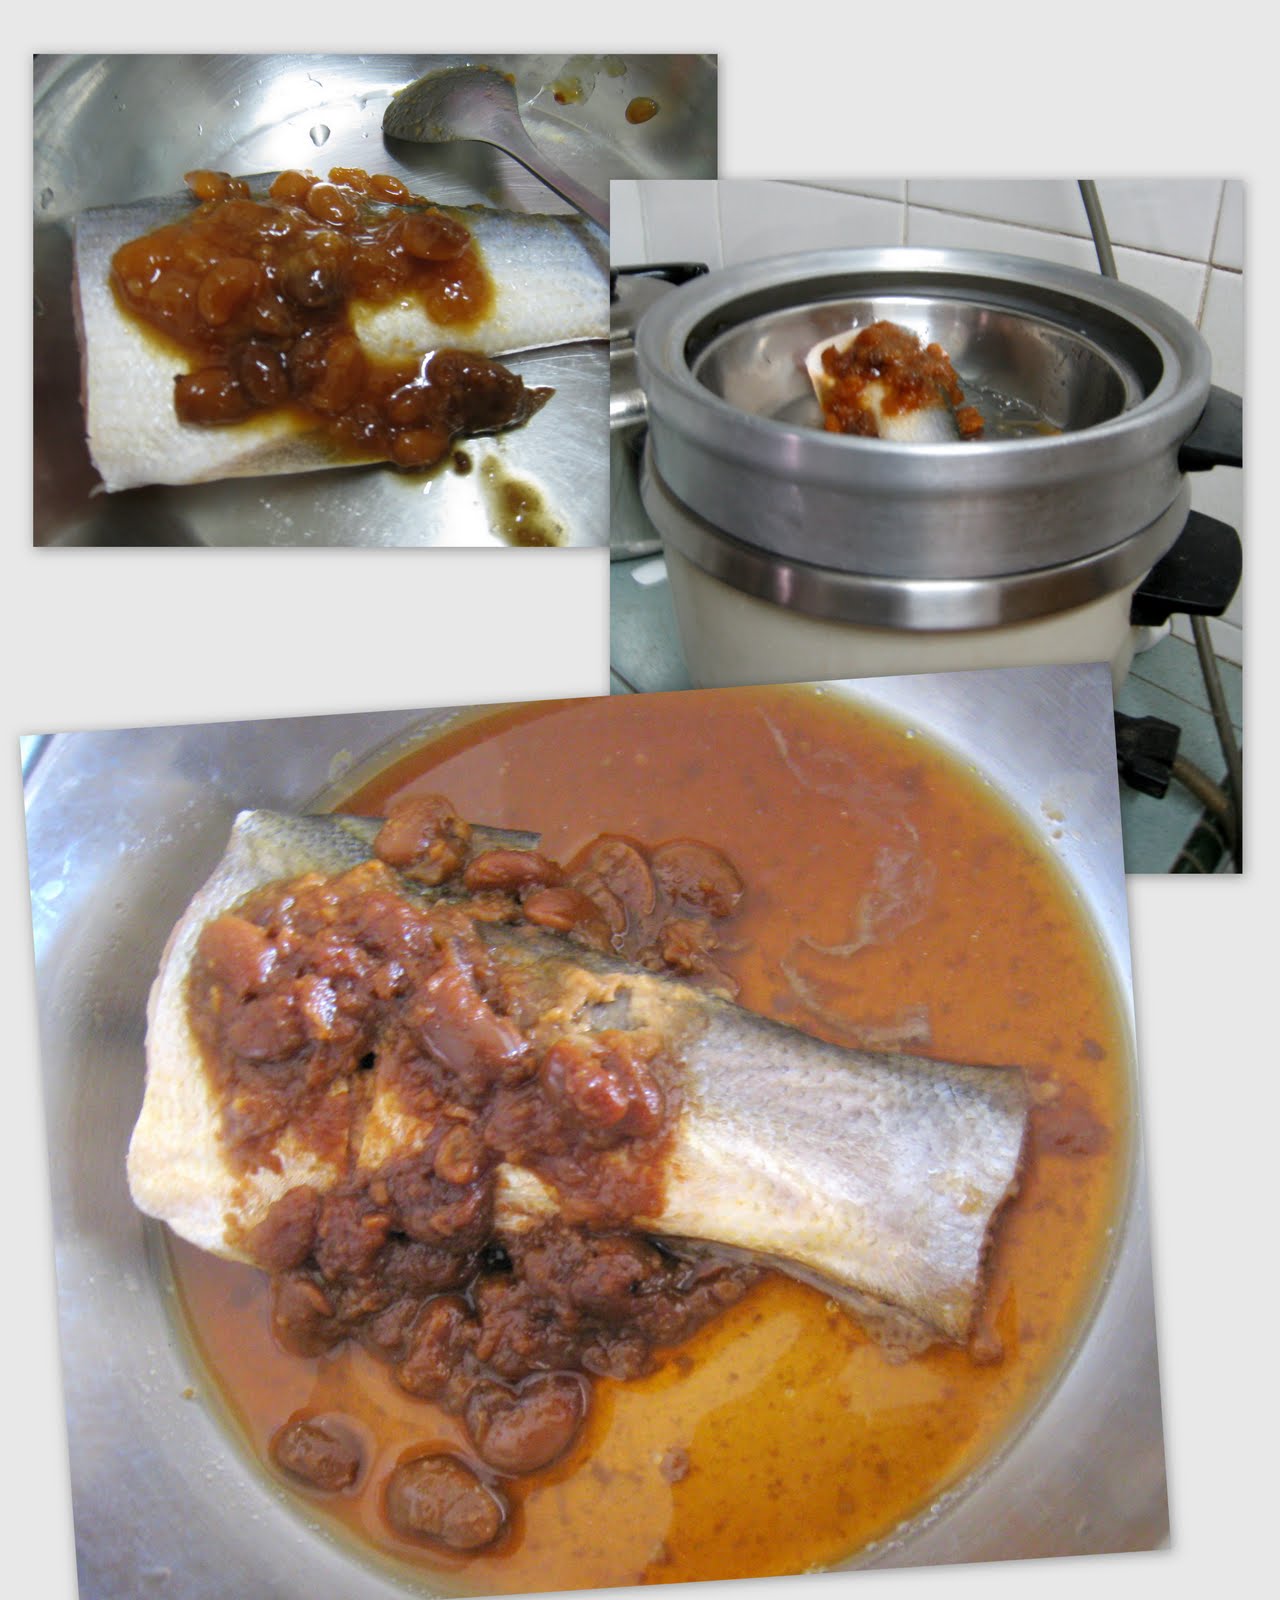 Teh Tarik Junction: Tau cheong steamed fish